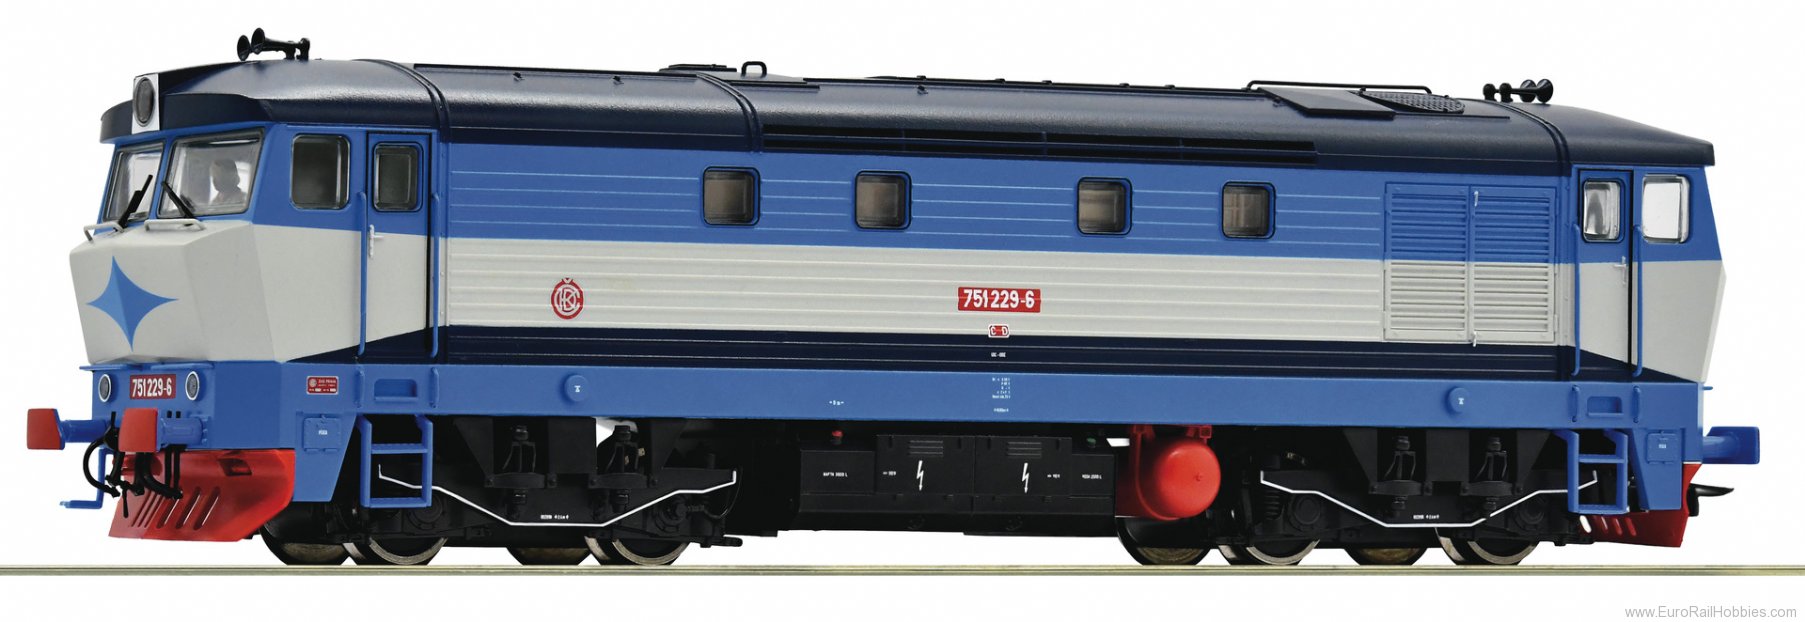 Roco 70924 CD Diesel locomotive 751 229-6,